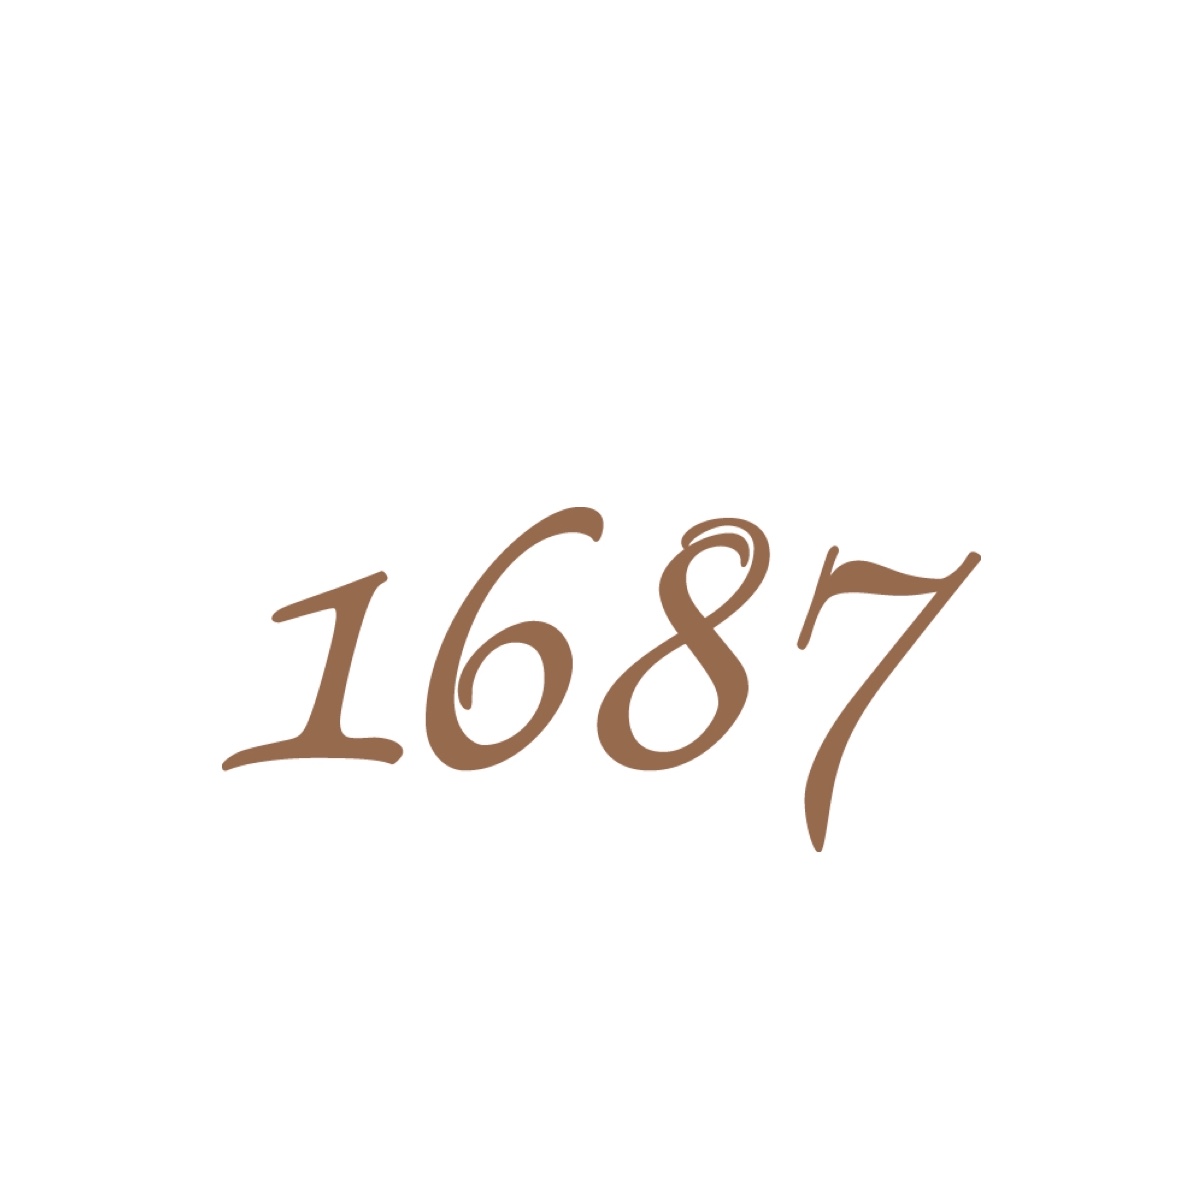 Logo 1687